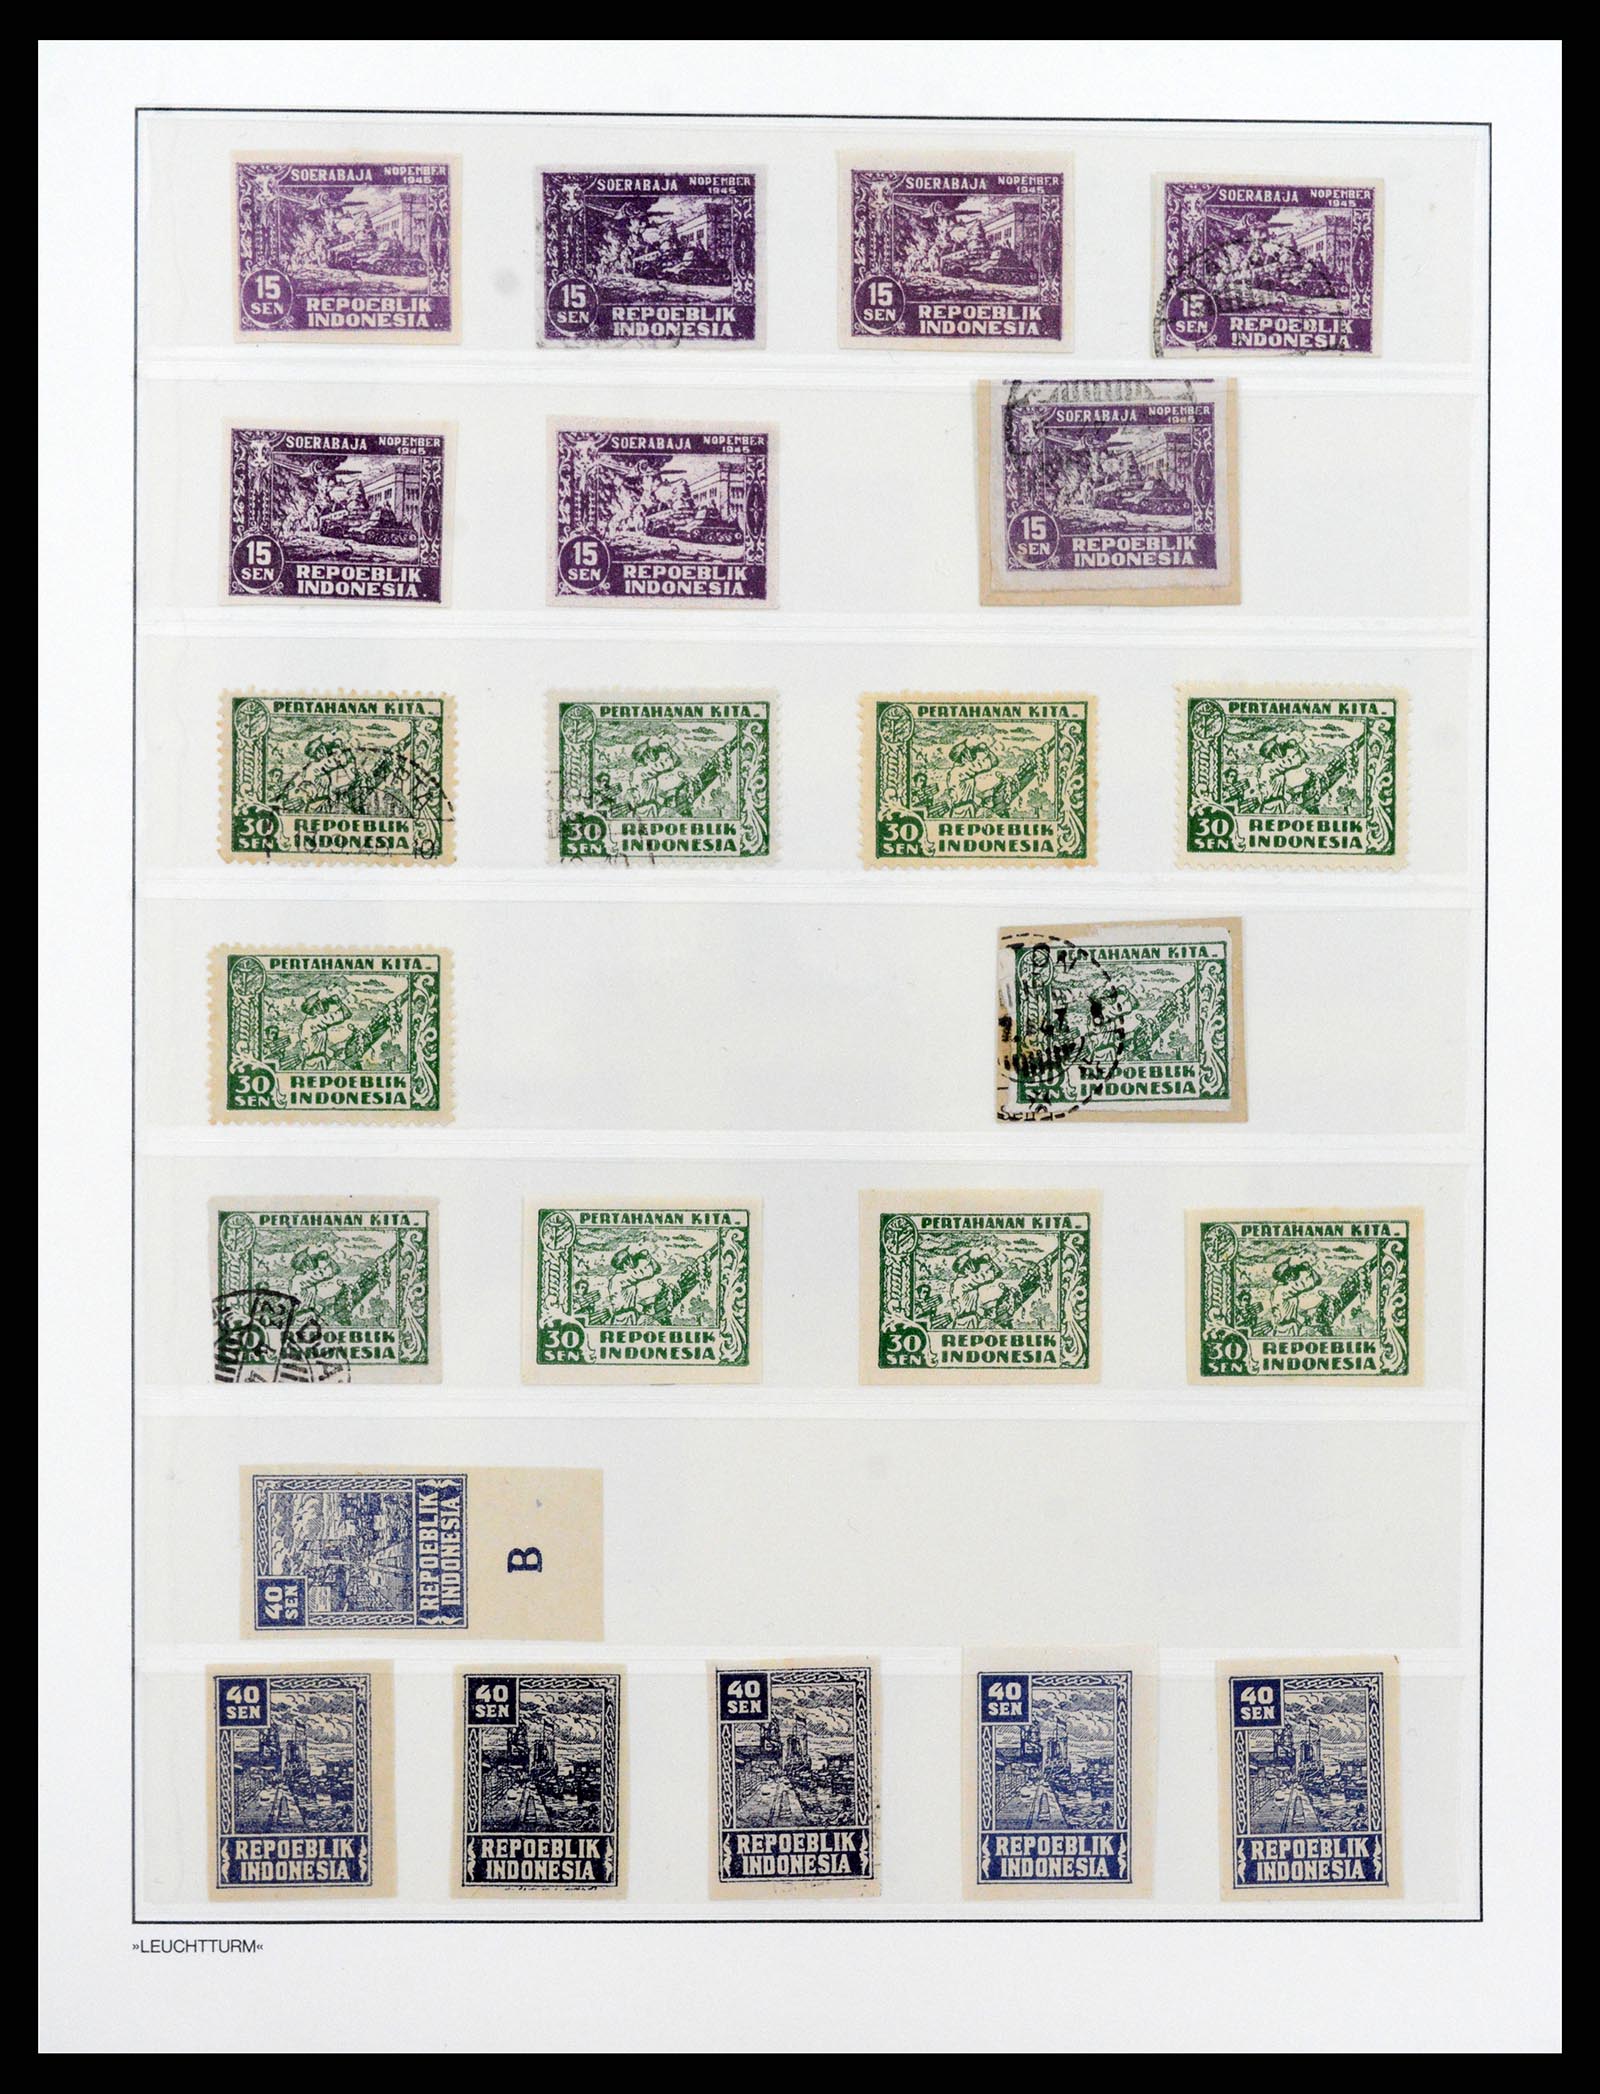 37435 020 - Stamp collection 37435 Indonesia interim period 1945-1948.